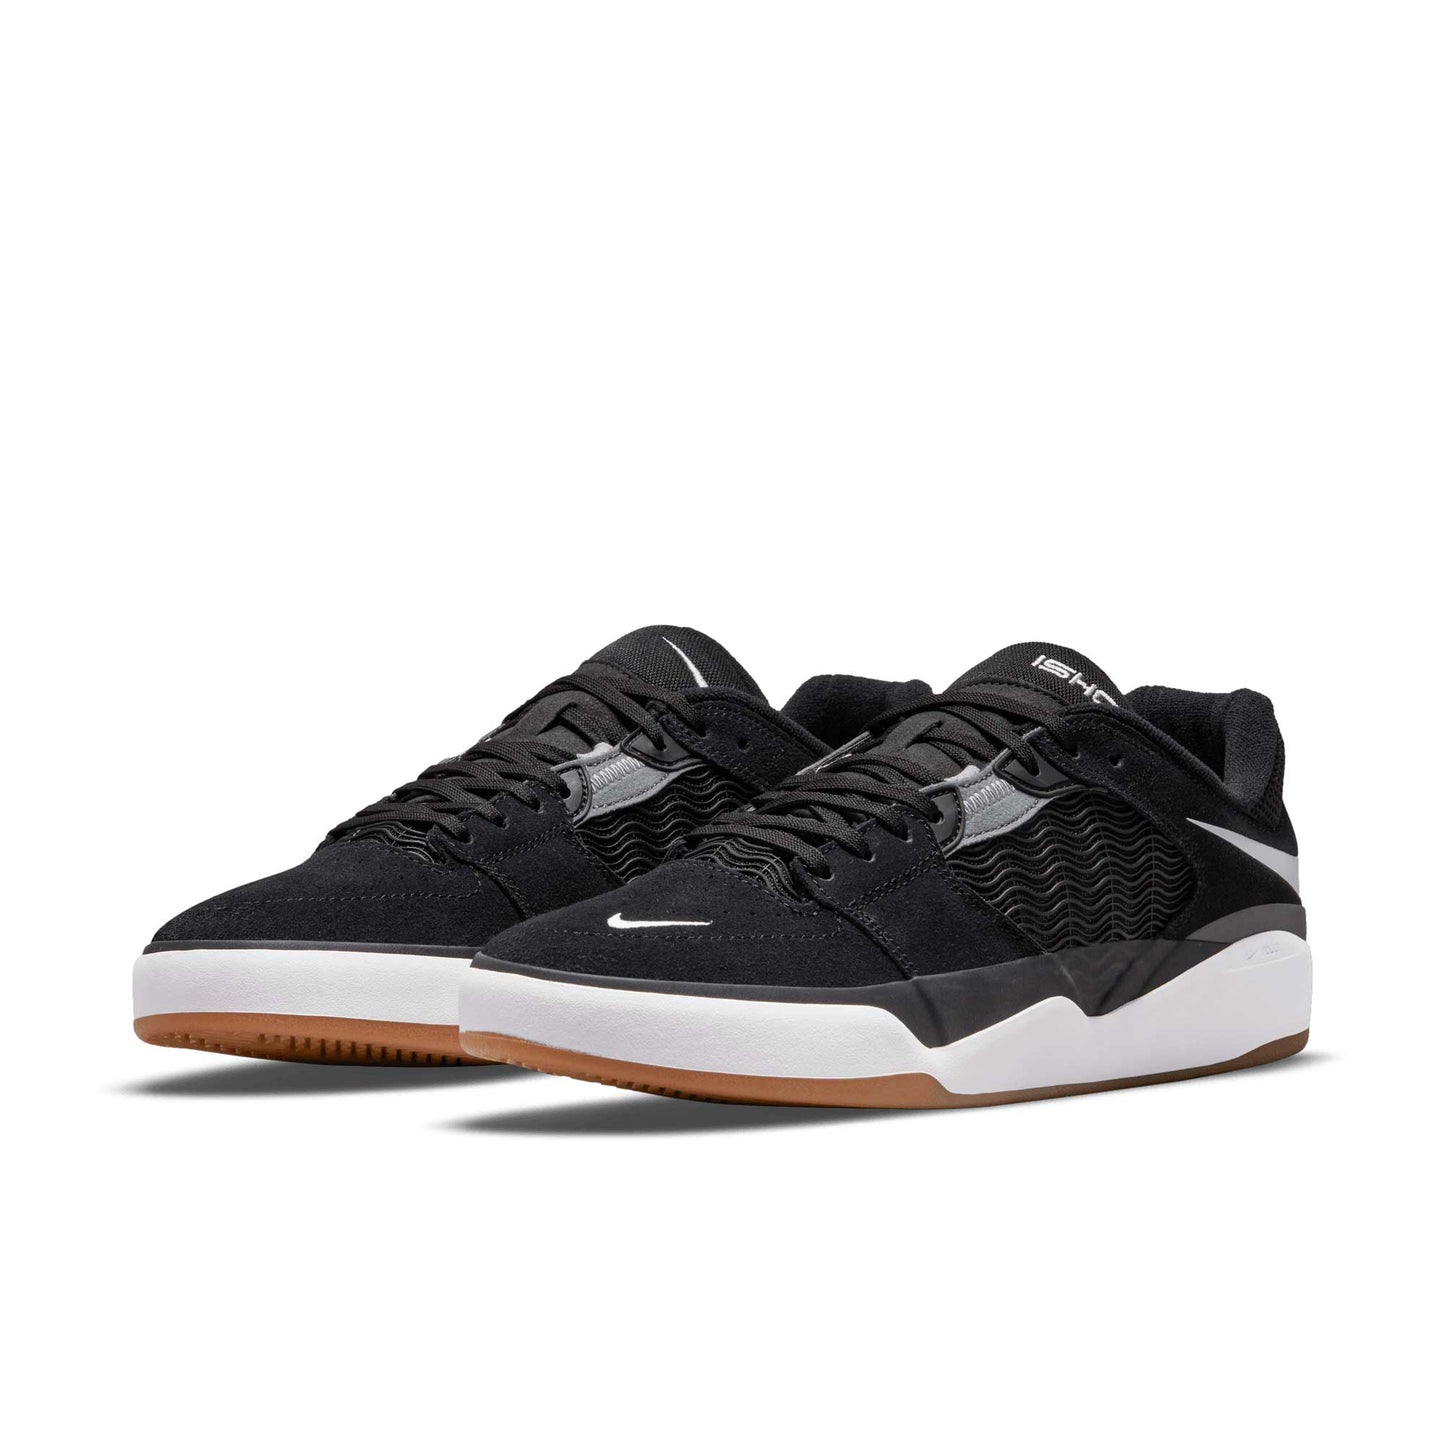 Nike SB Ishod Wair, black/white-dark grey-black - Tiki Room Skateboards - 2